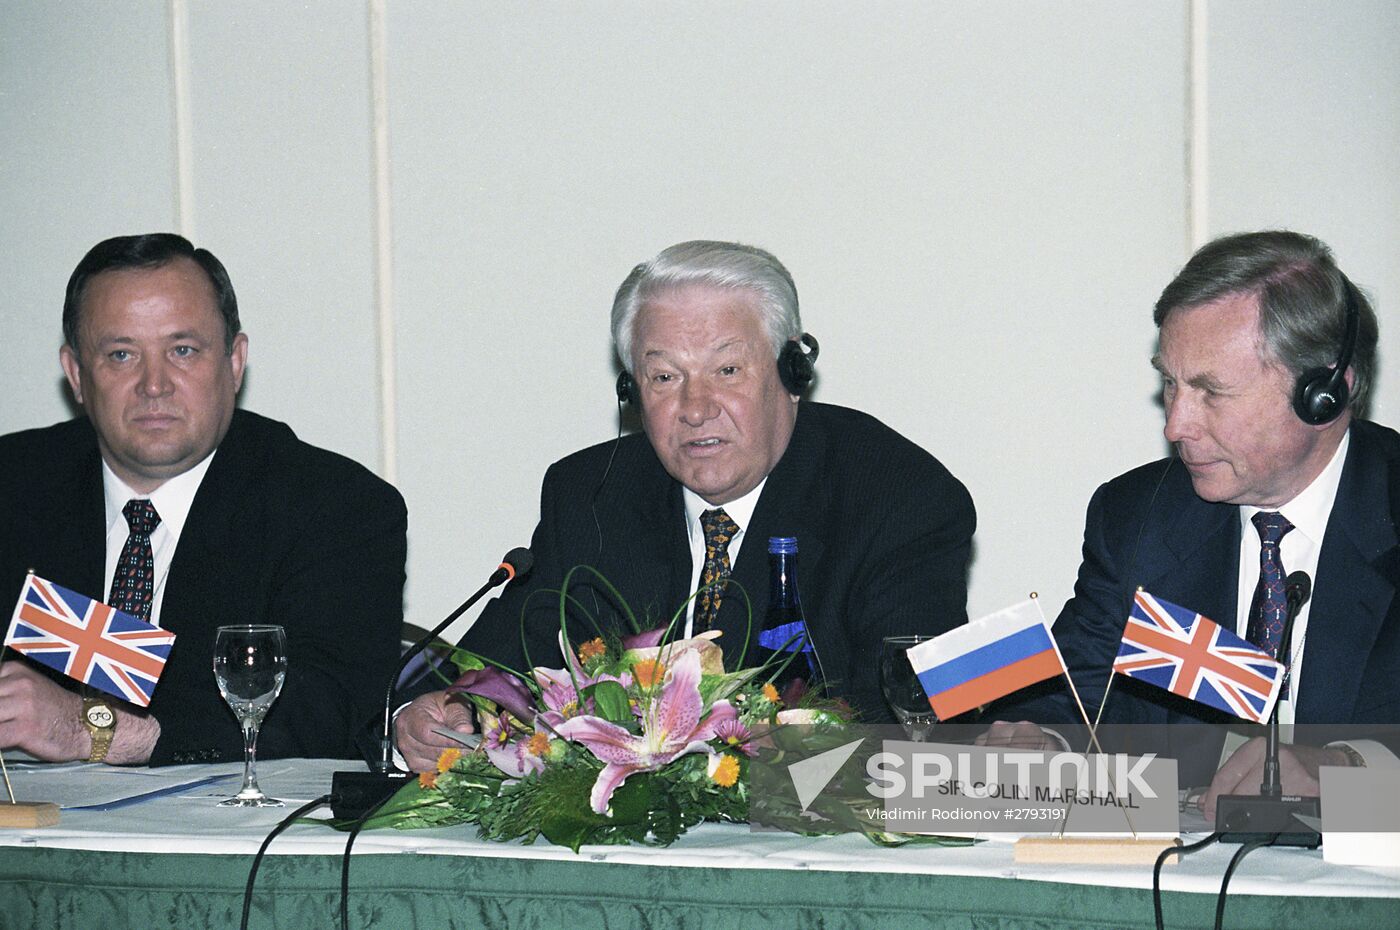 Boris Yeltsin meets with business reperesentatives at G8 summit